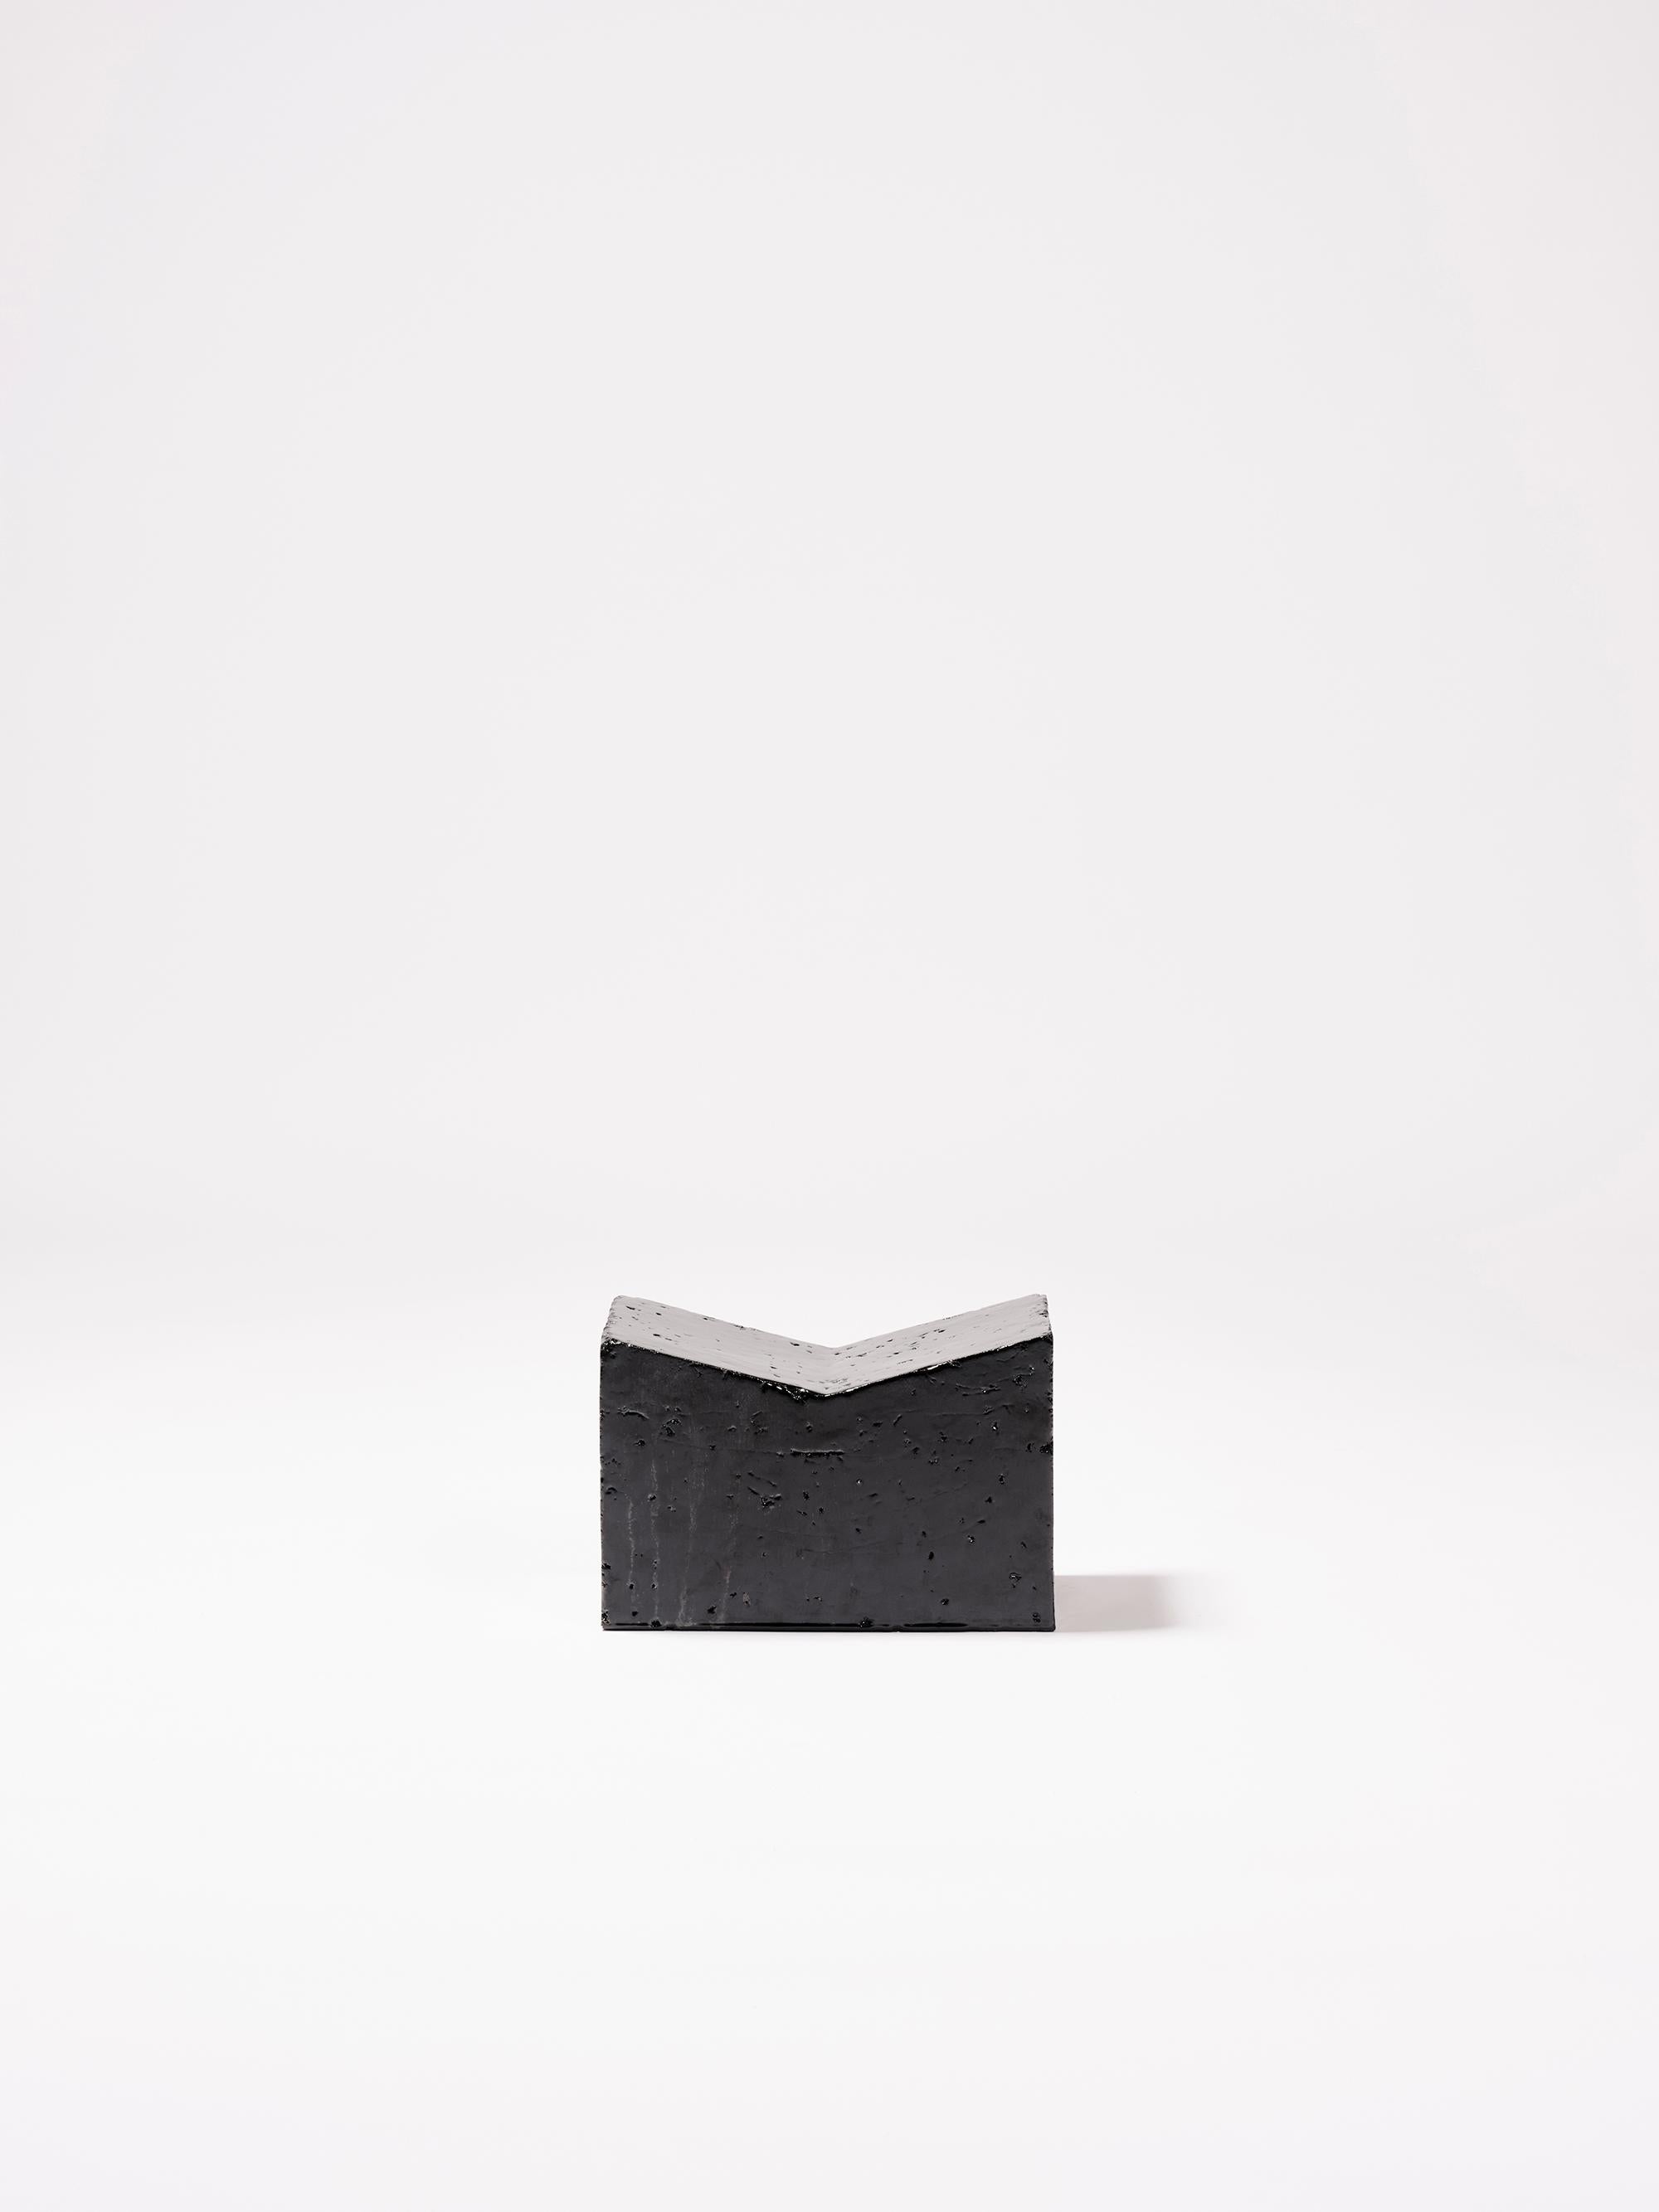 Enameled Contemporary Ceramic Table Lectern Reading Desk Glazed Earthenware Black For Sale